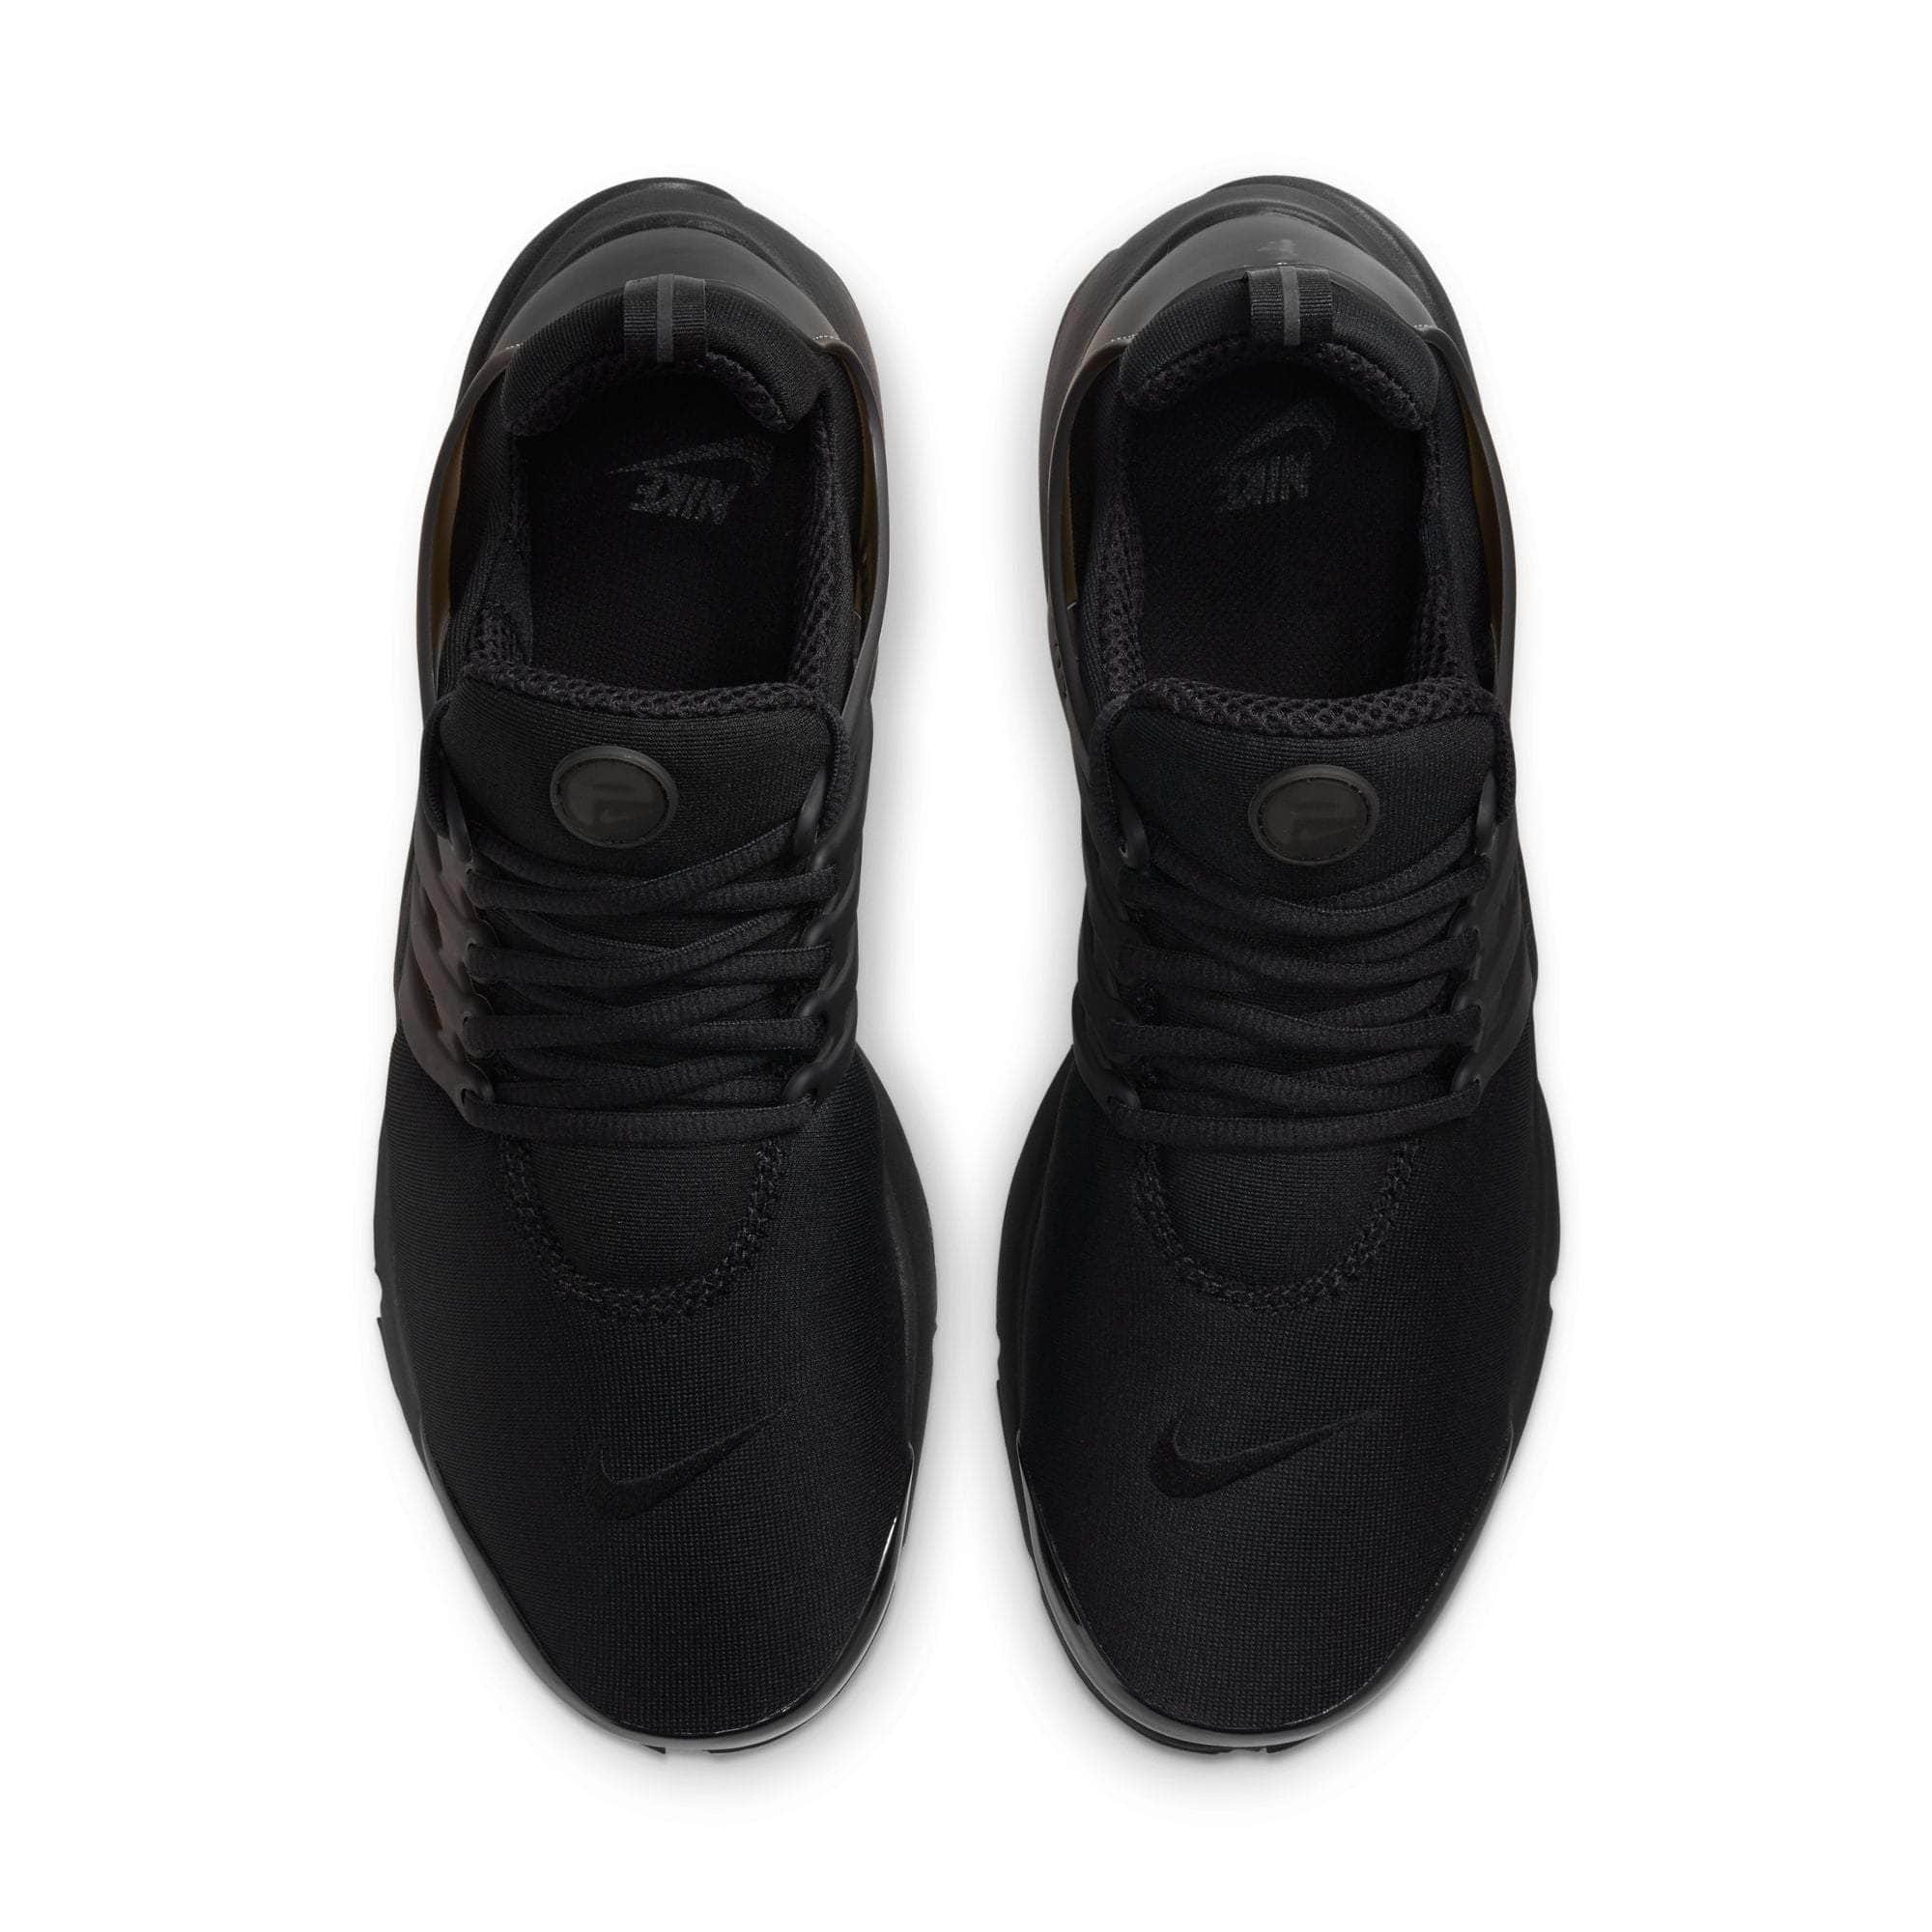 Nike Air Presto Men's Shoes.